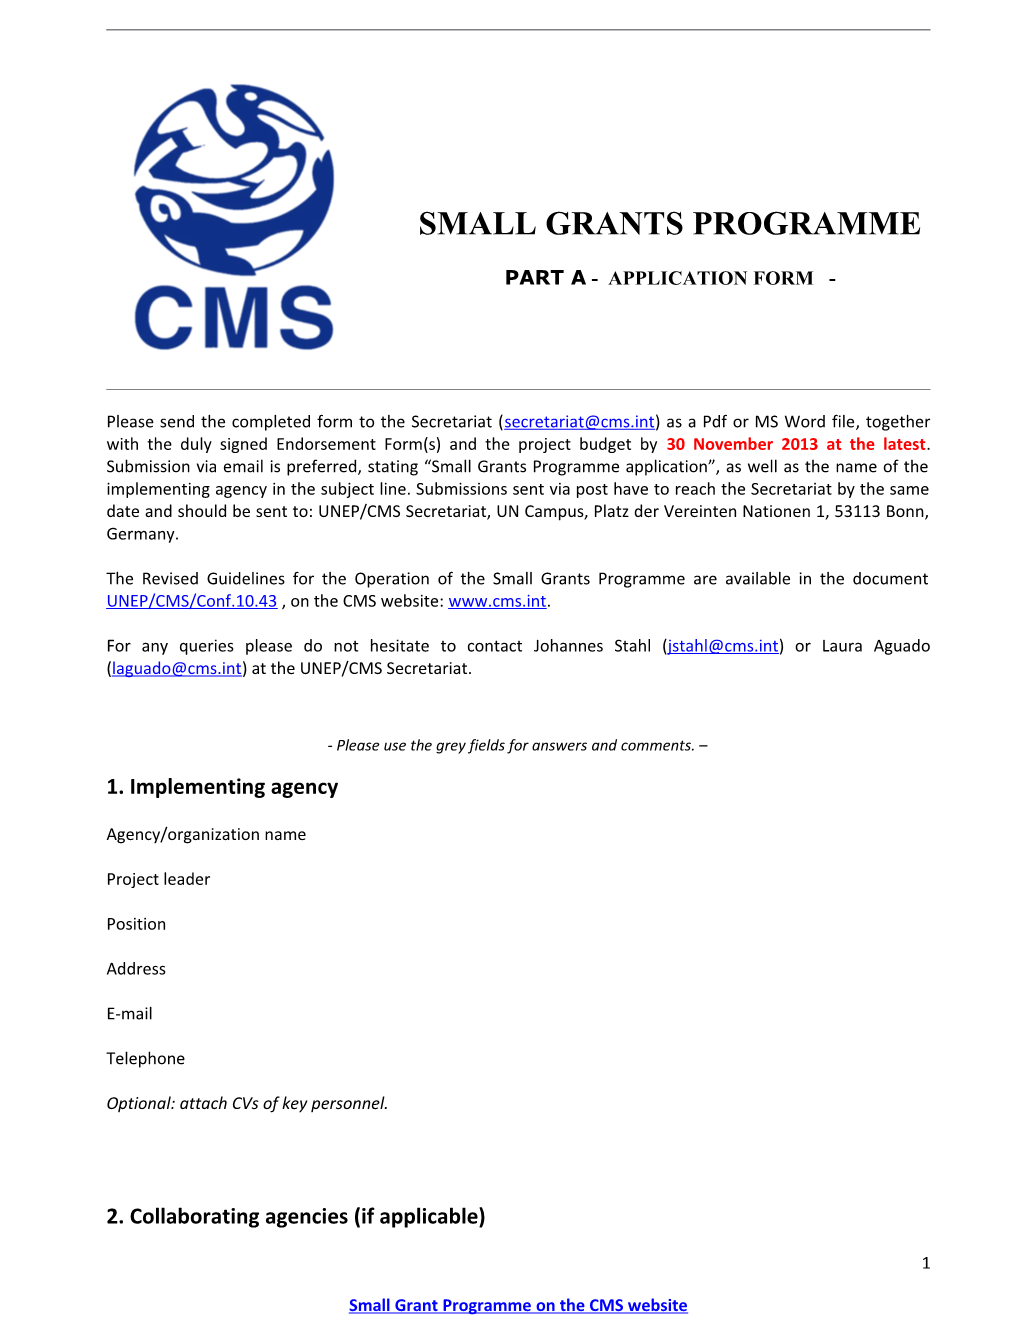 Small Grants Programme